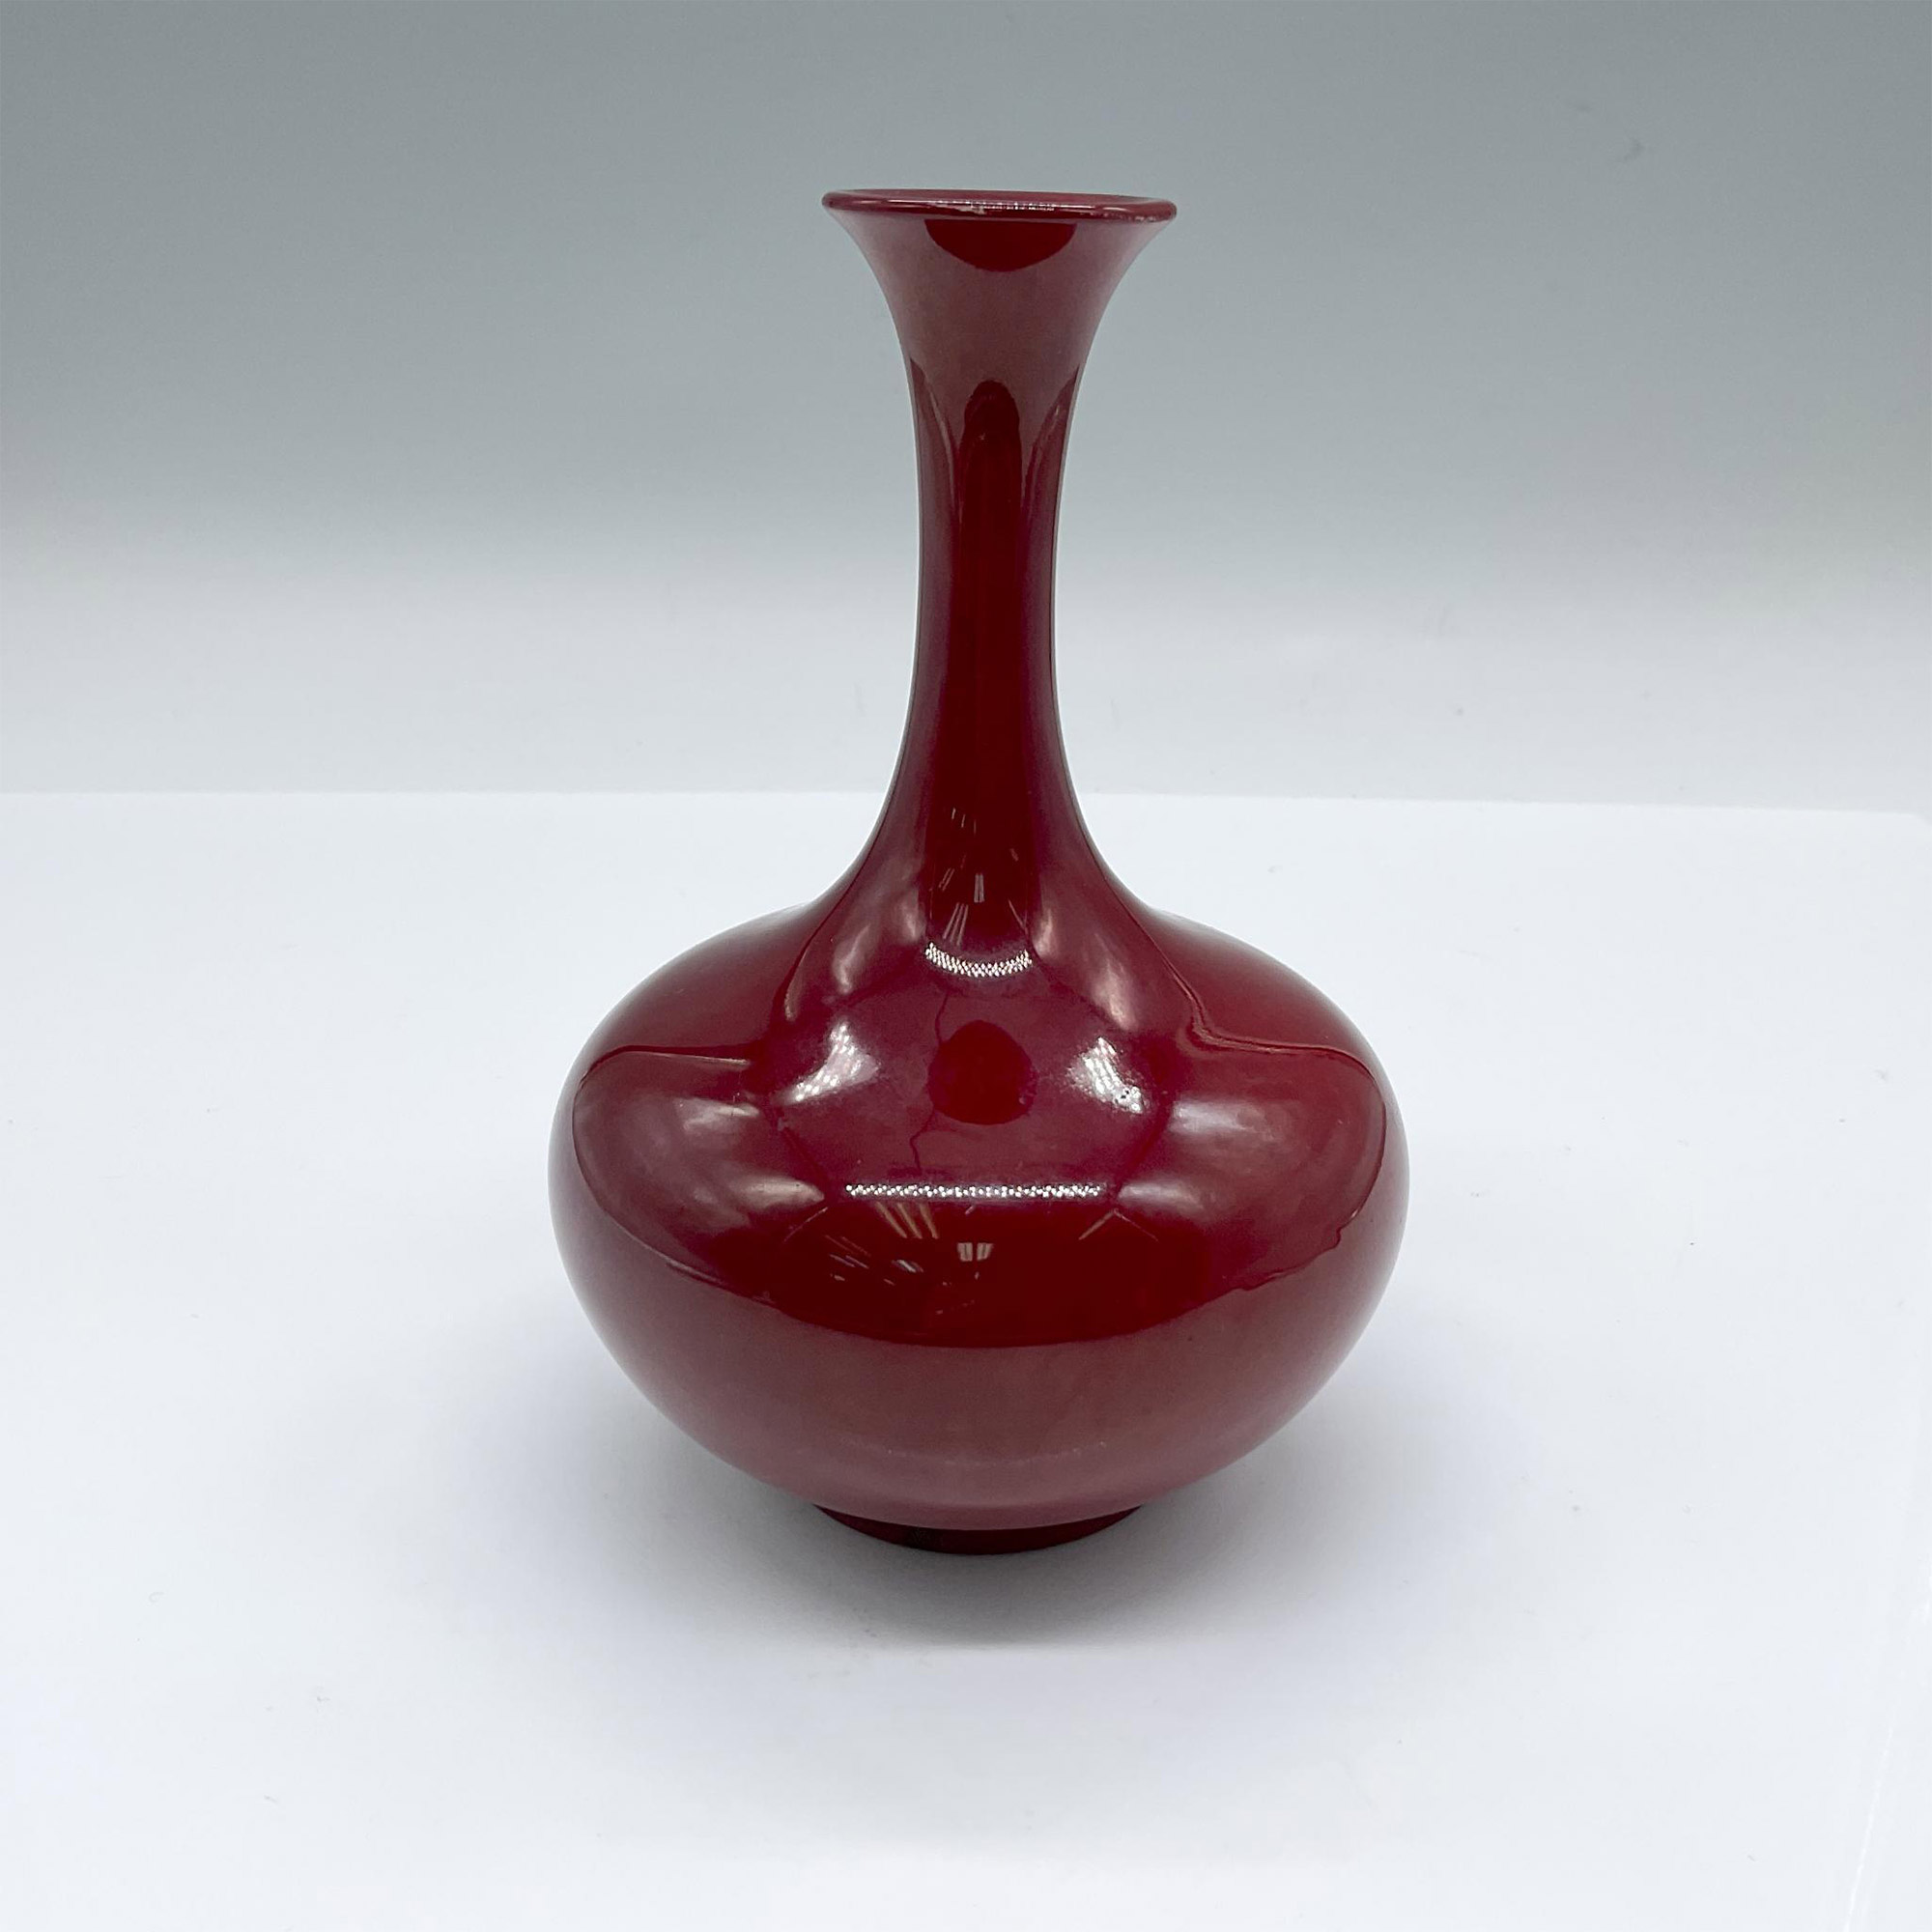 Royal Doulton Small Flambe Bud Vase - Image 2 of 3